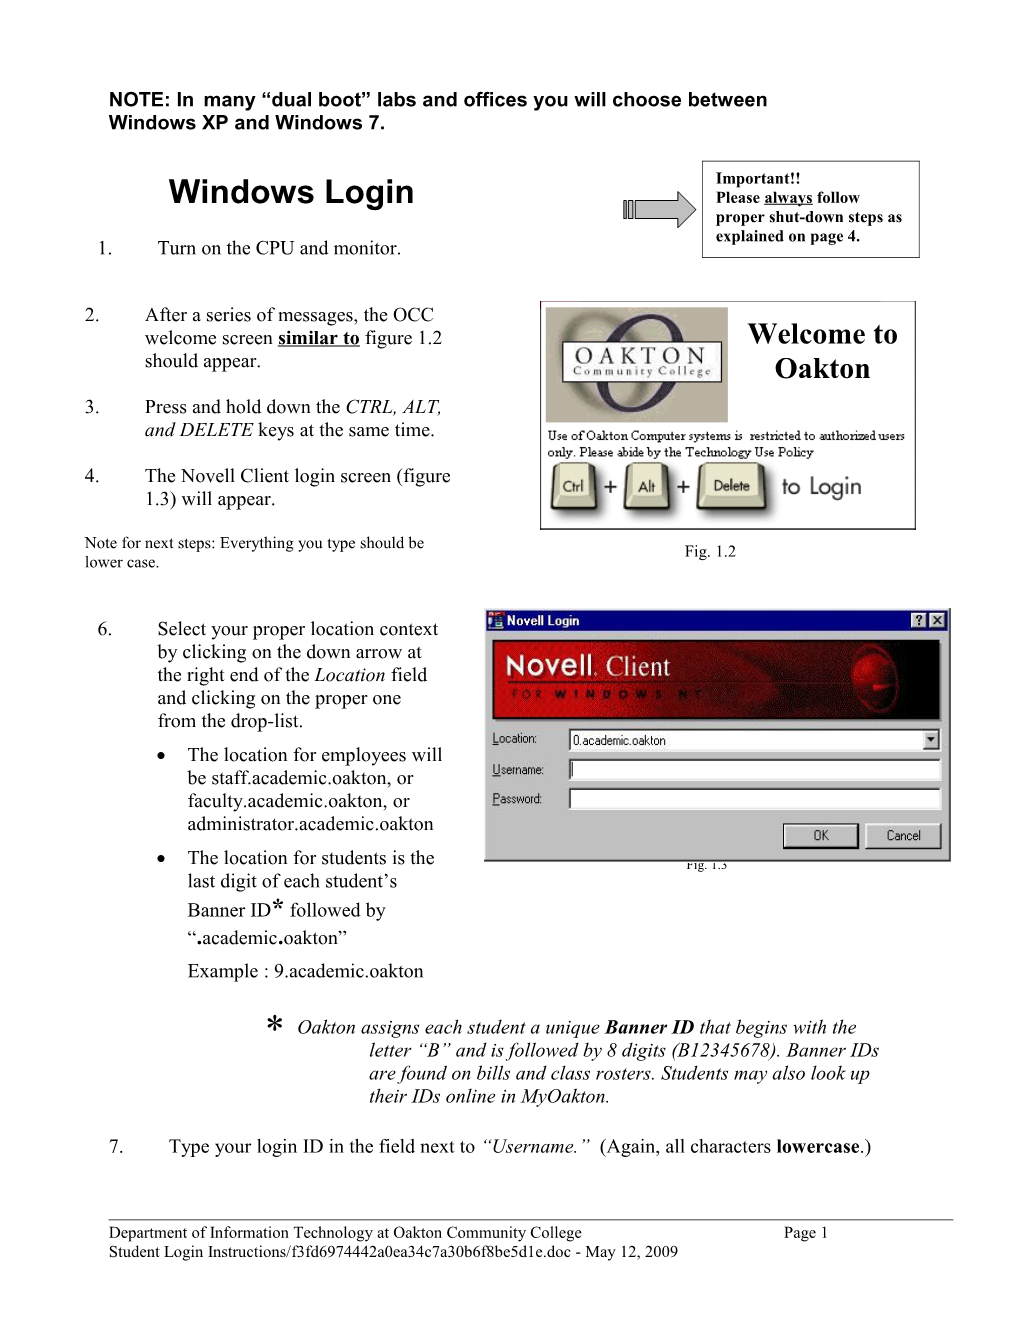 Windows NT Login s1